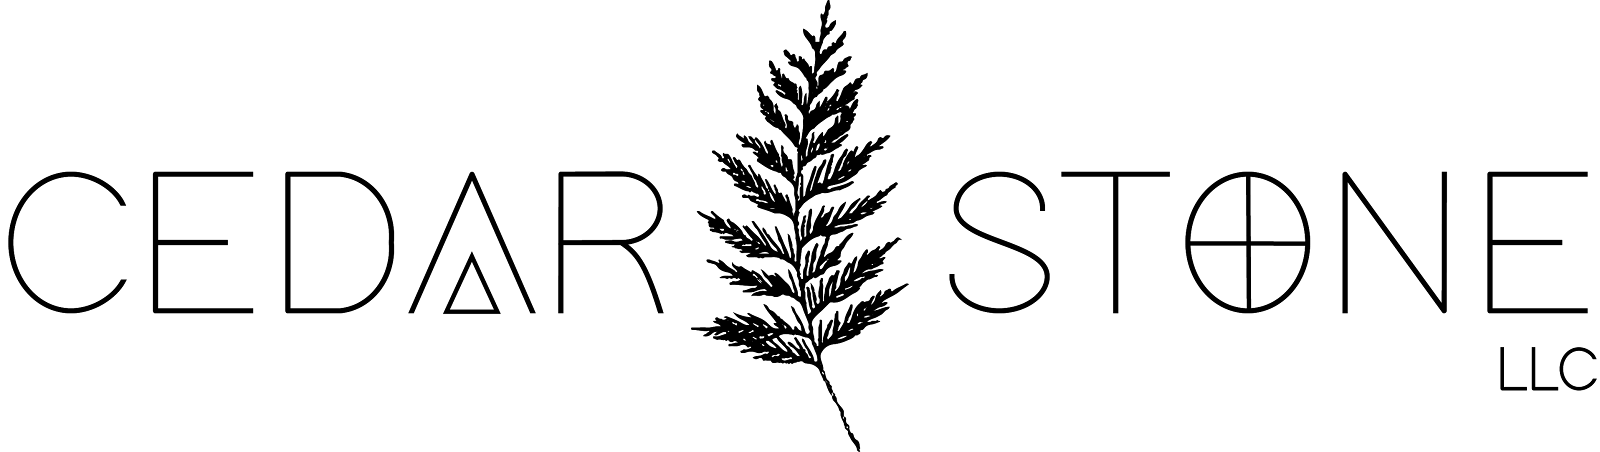 Cedarstone Logo